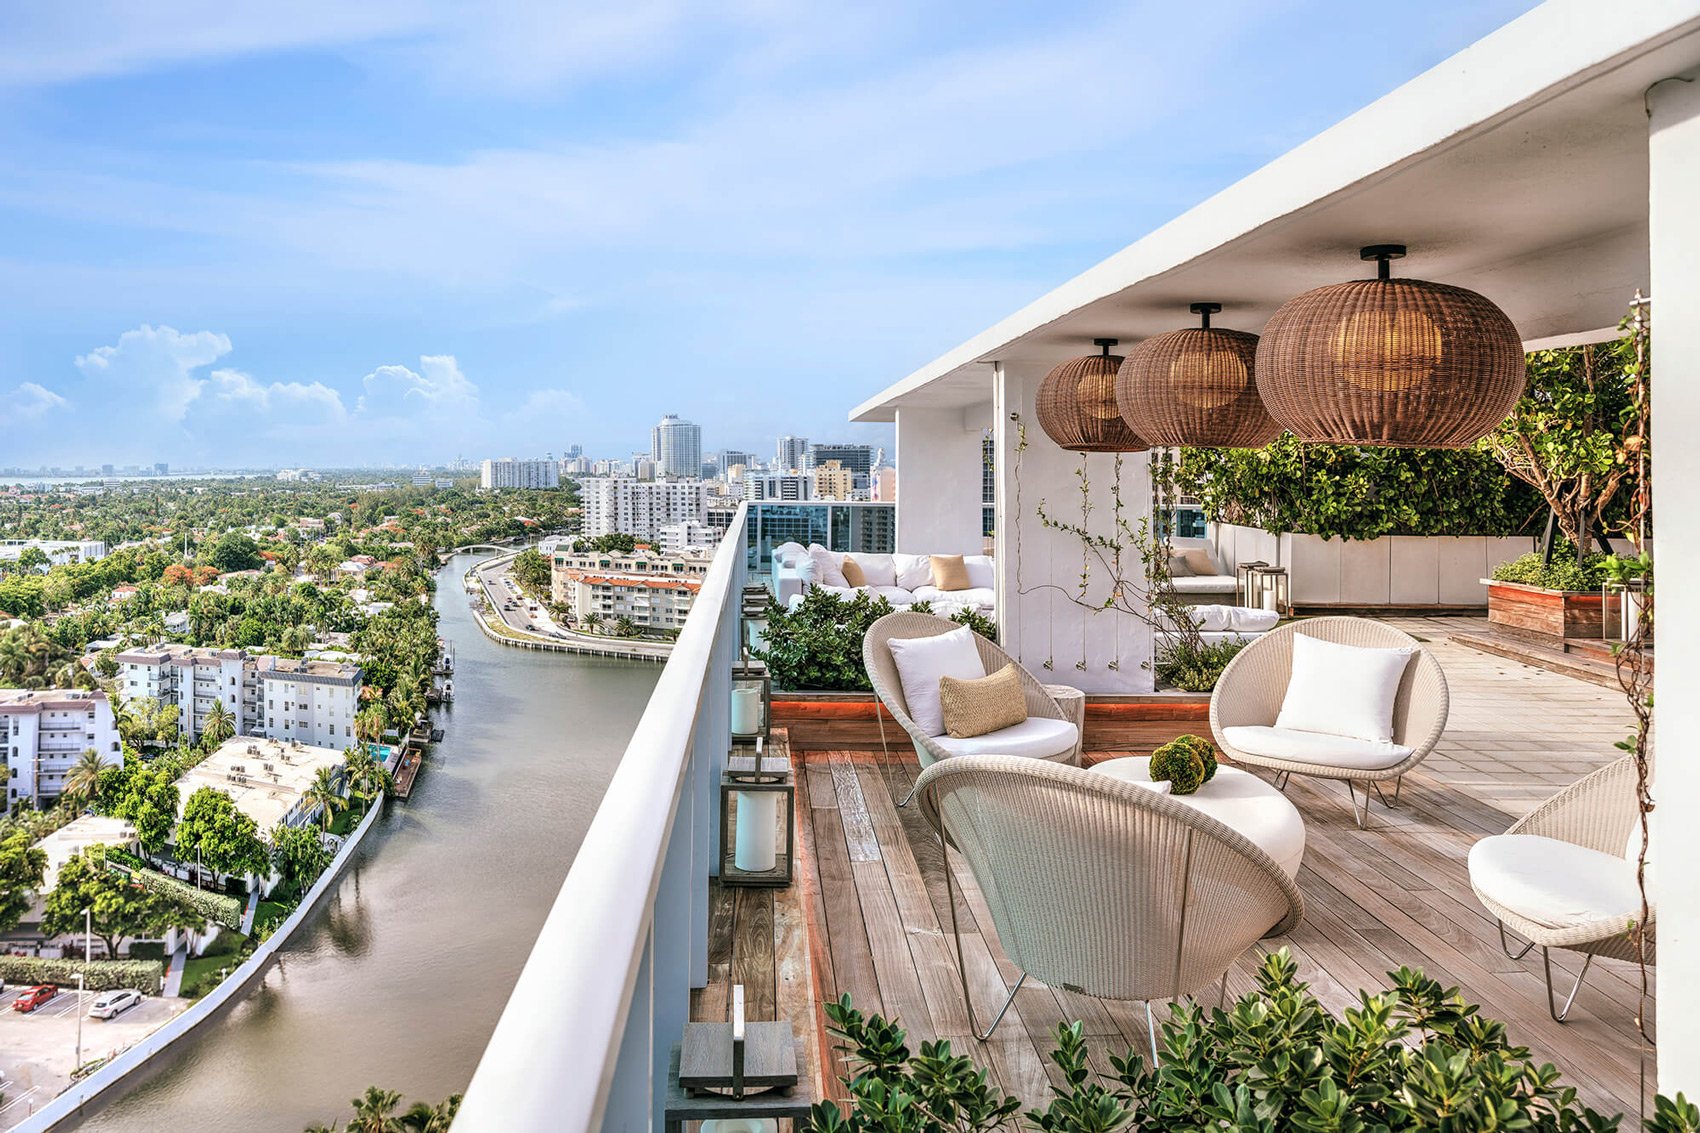 Best Luxury Hotels in Miami - 1 Hotel South Beach